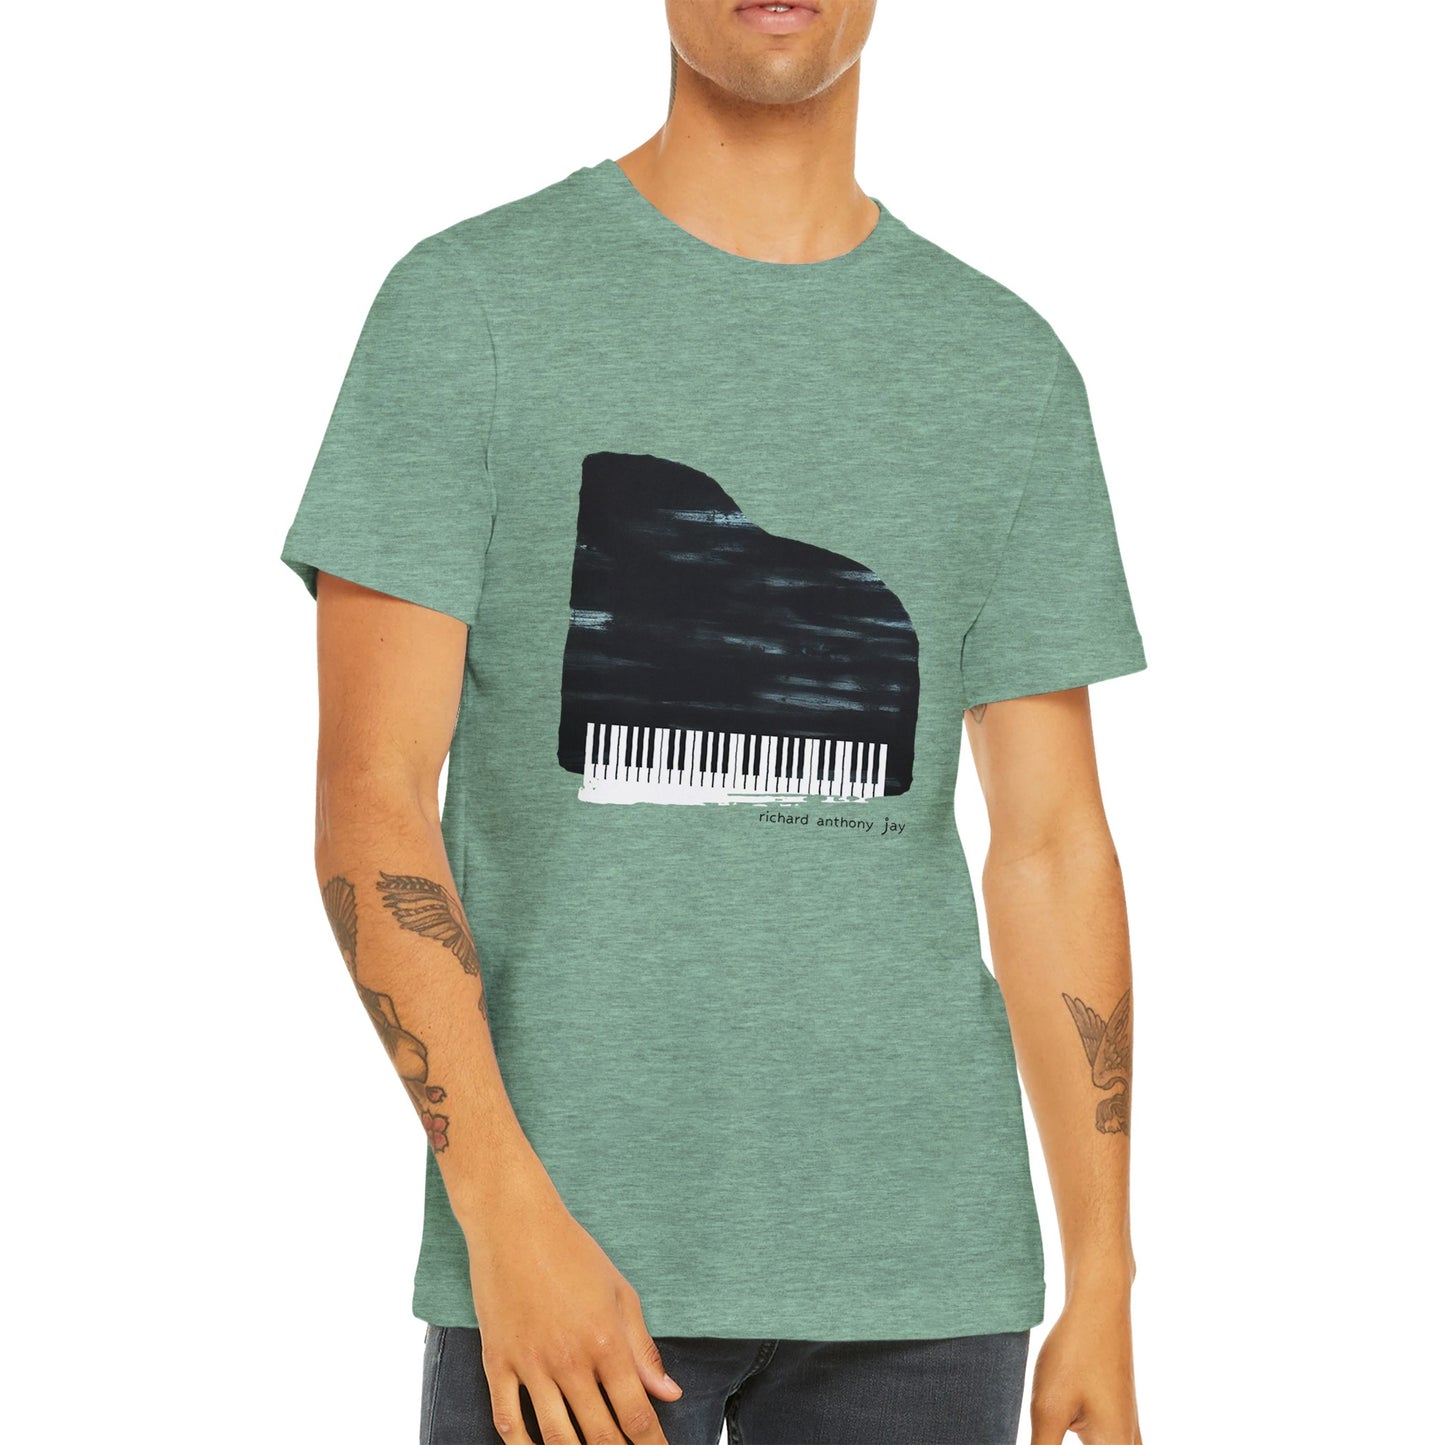 SOLO PIANO I (t-shirt)